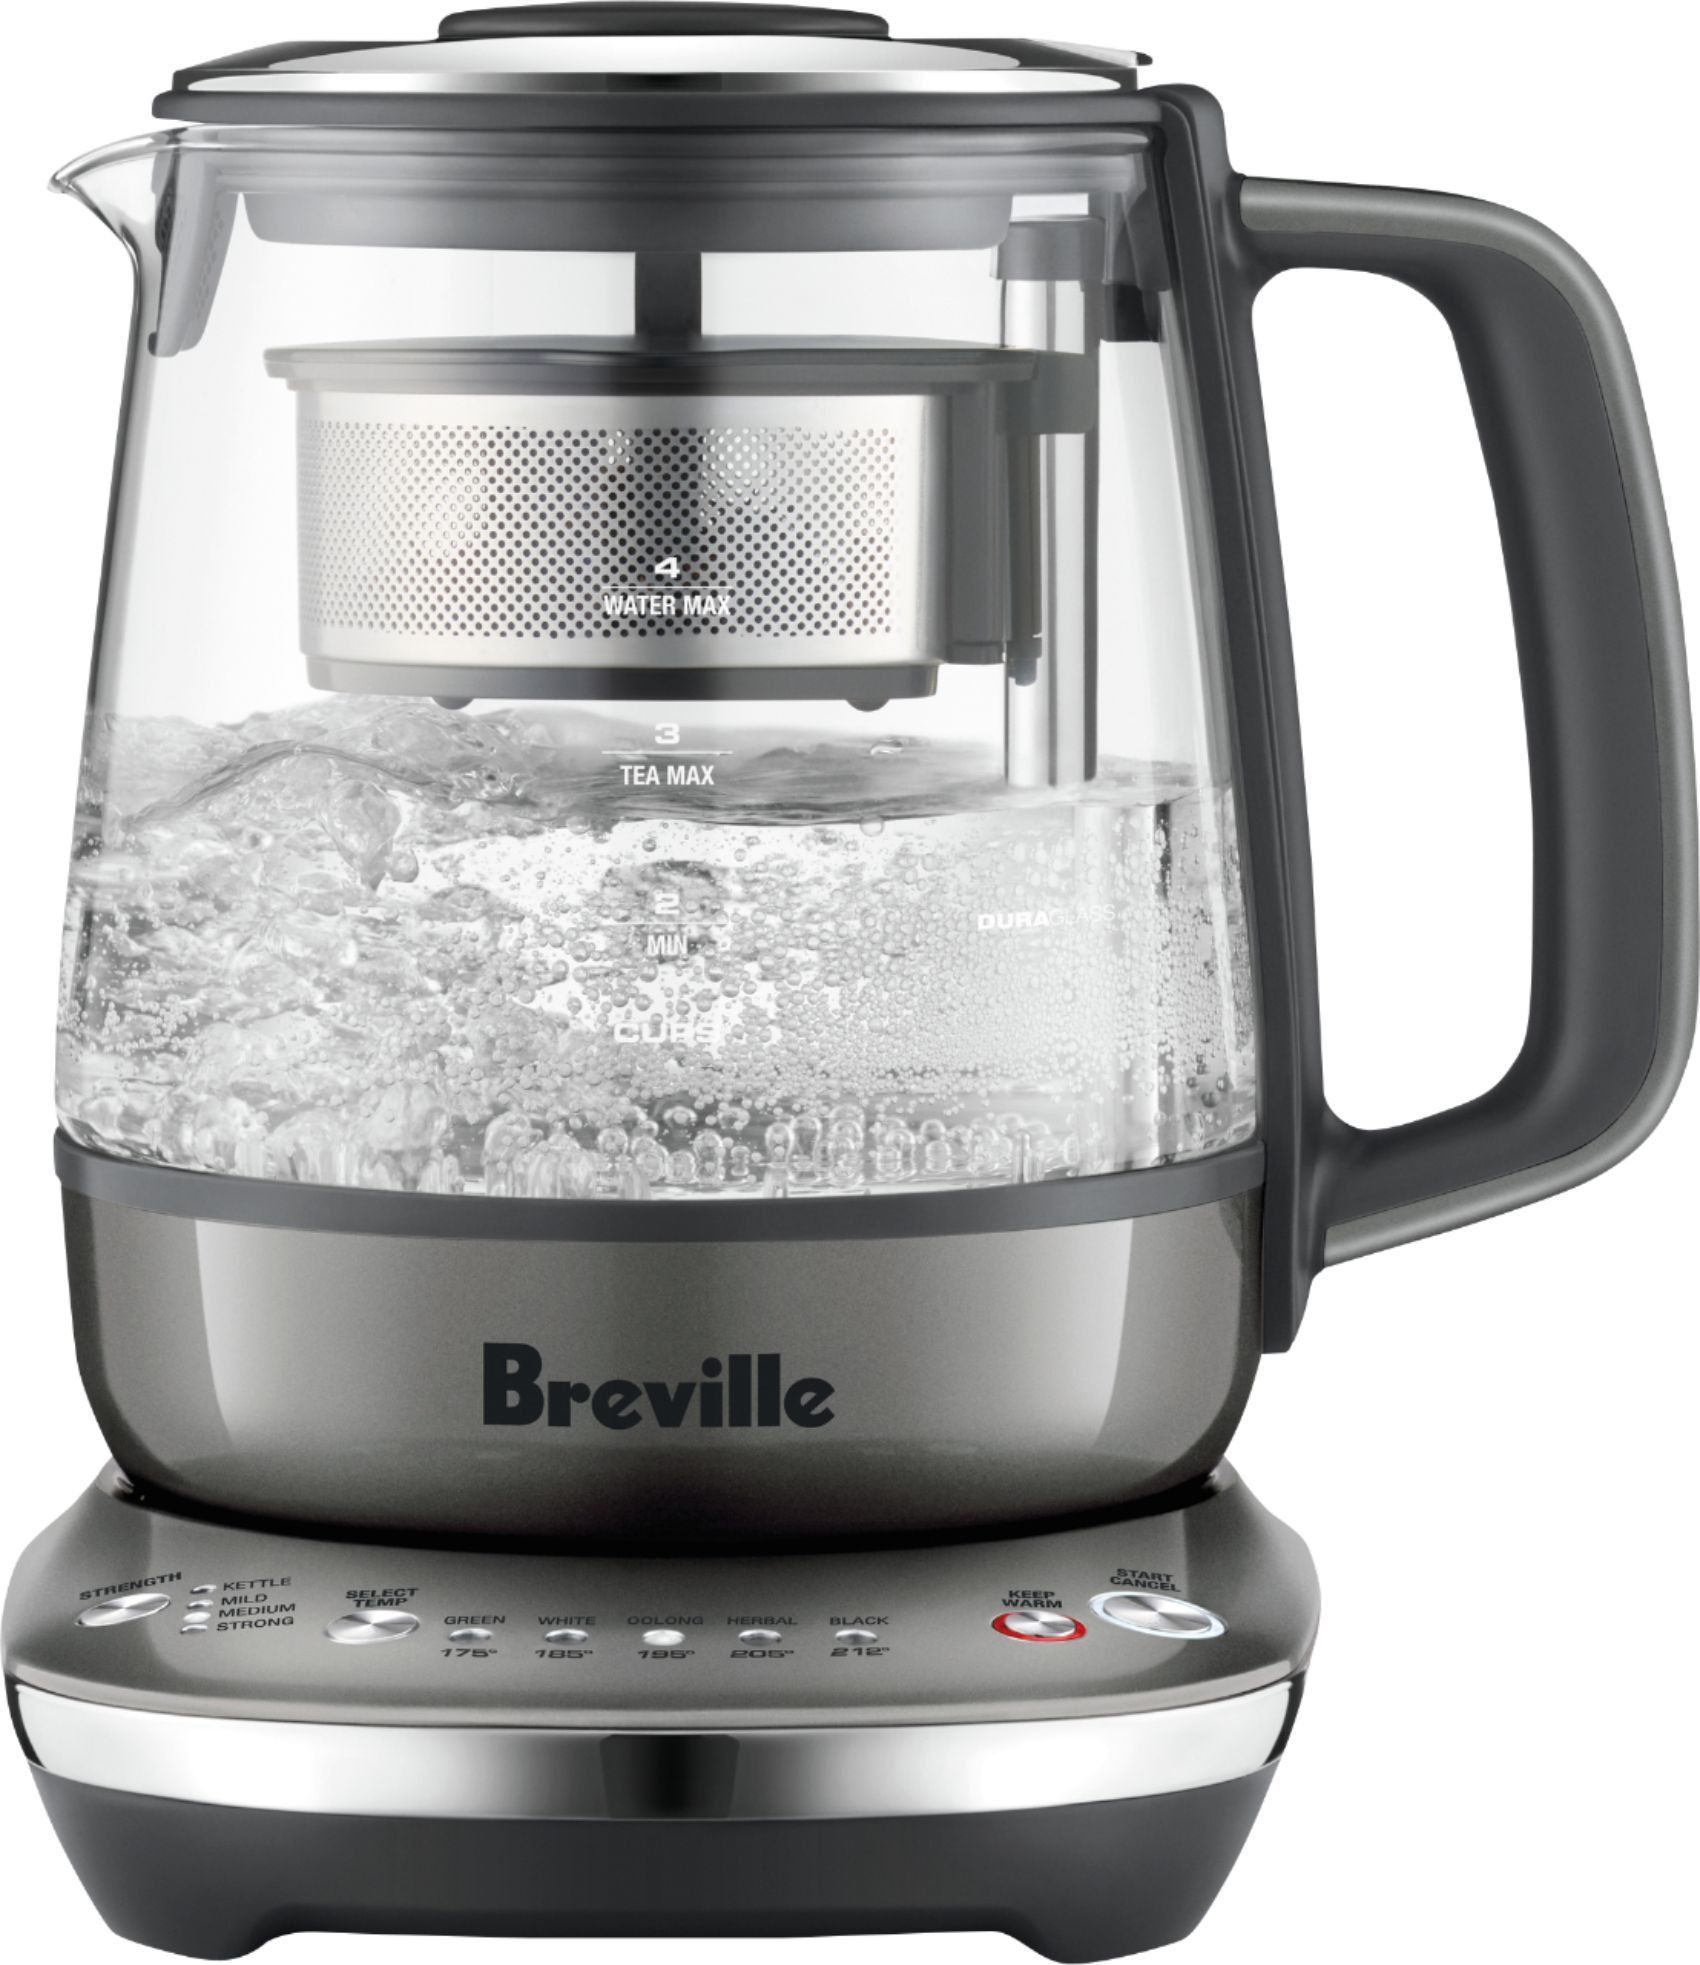 Breville the Tea Maker Brushed Stainless Steel BTM800XL - Best Buy